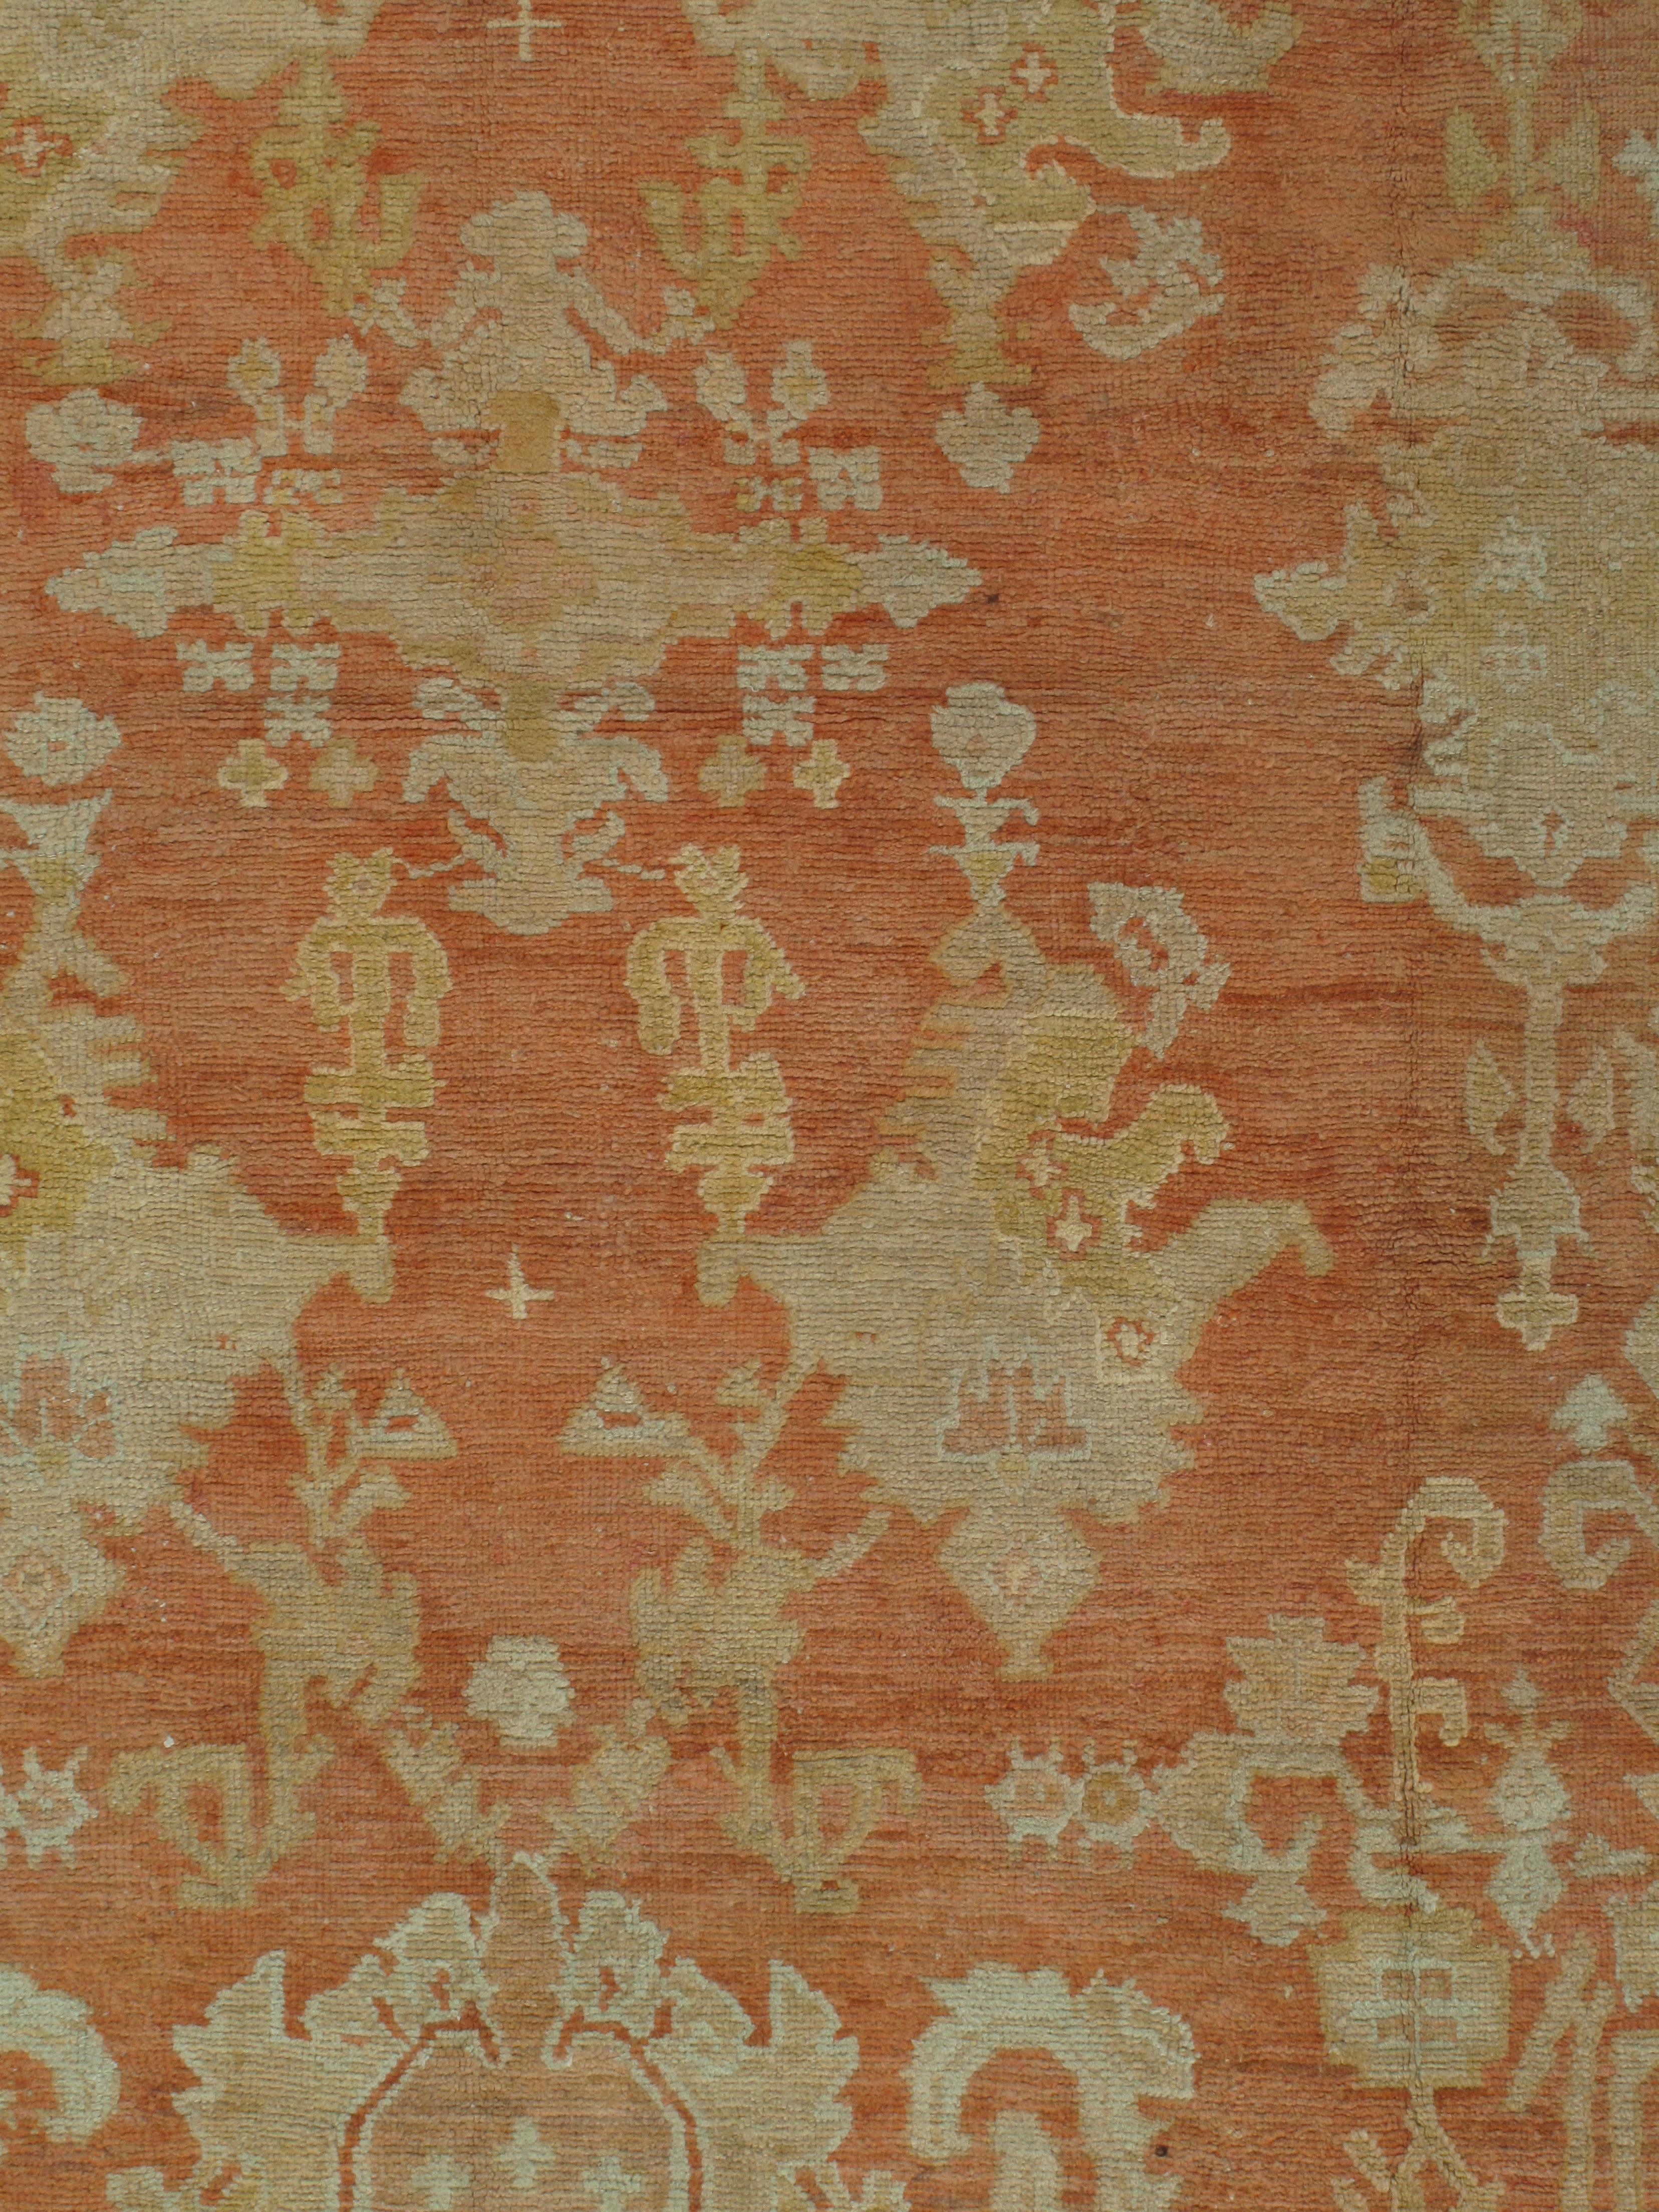 Antique Oushak Carpet, Handmade Oriental Rug, Coral Field, Gold, Ivory Border For Sale 3